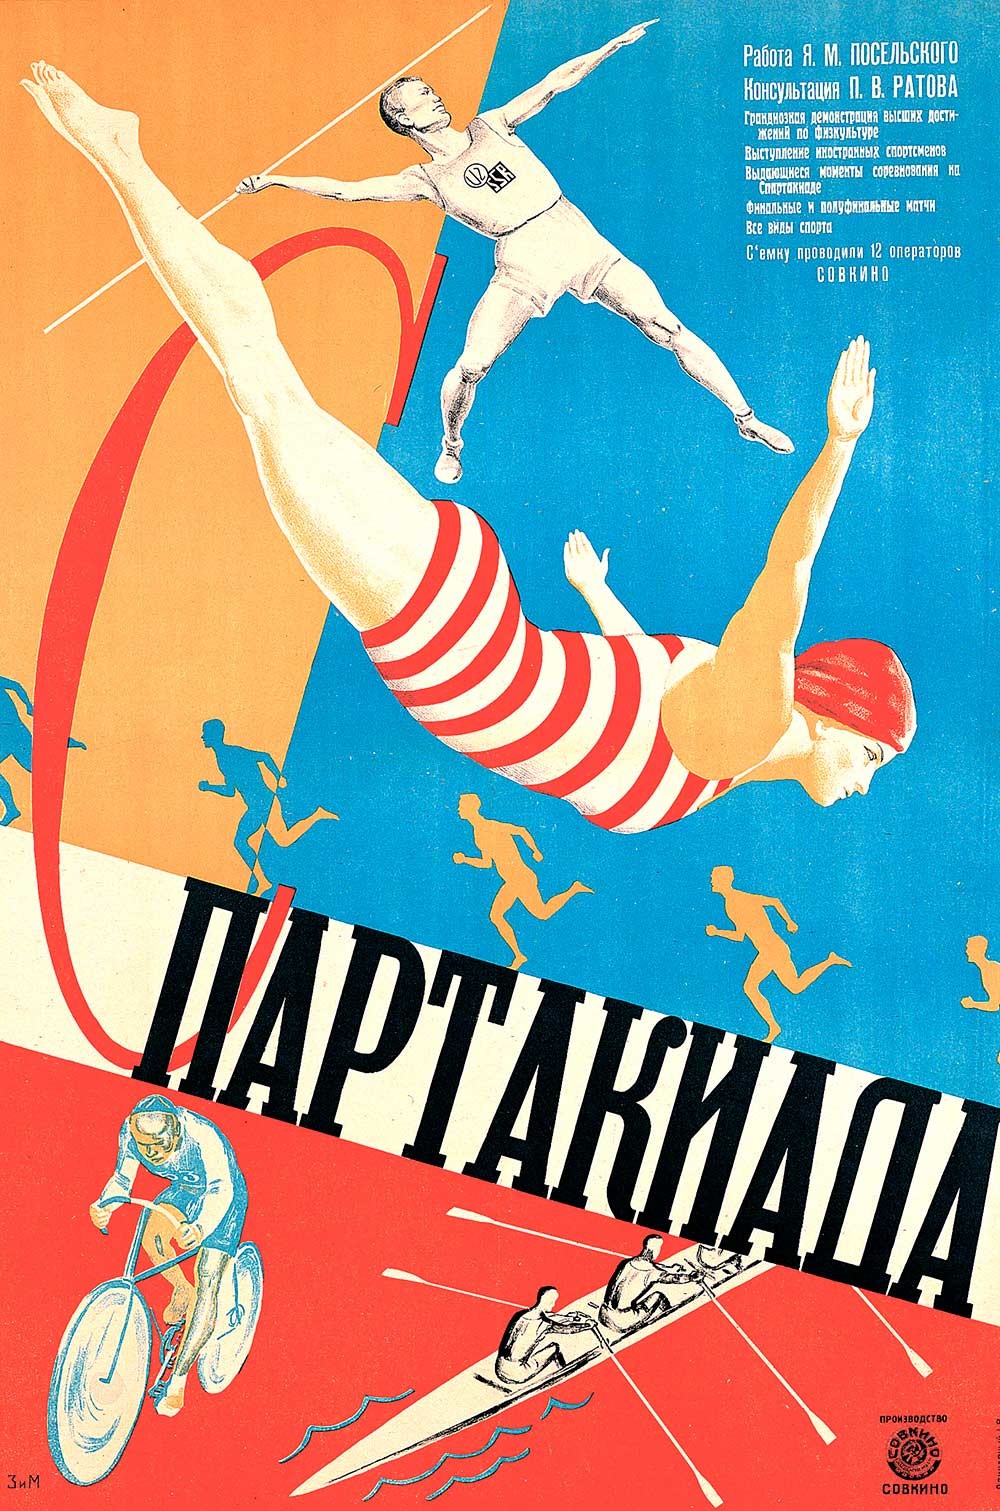 ZIM, Film poster for Spartakiada, 1927